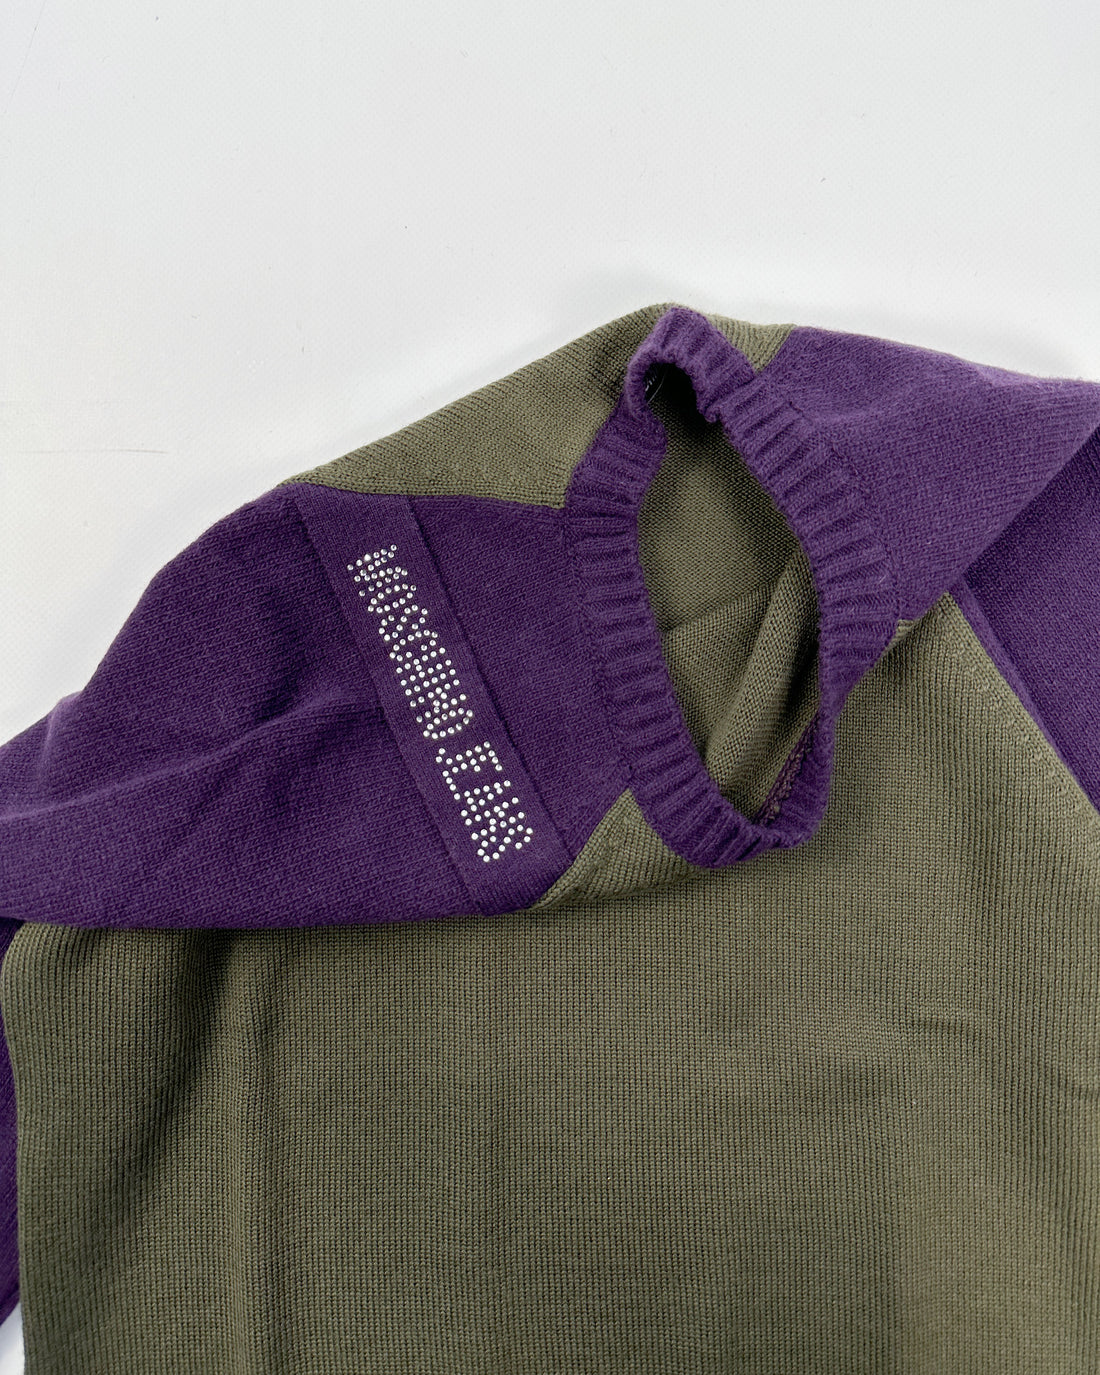 Moschino Purple and Green Knitwear 2000's